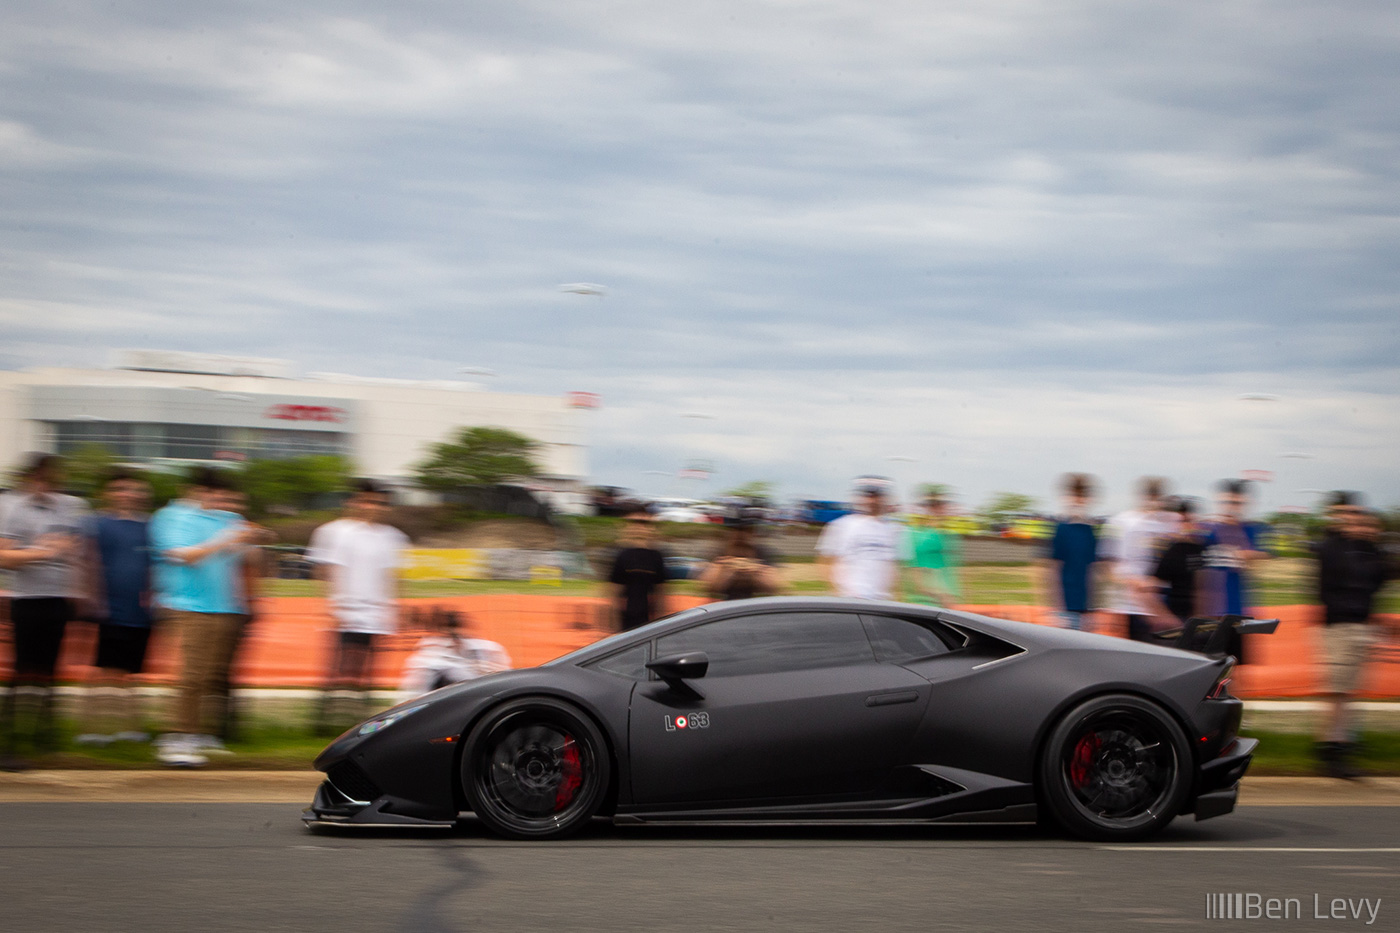 Stealthy Black Lamborghini Huracan on the Street